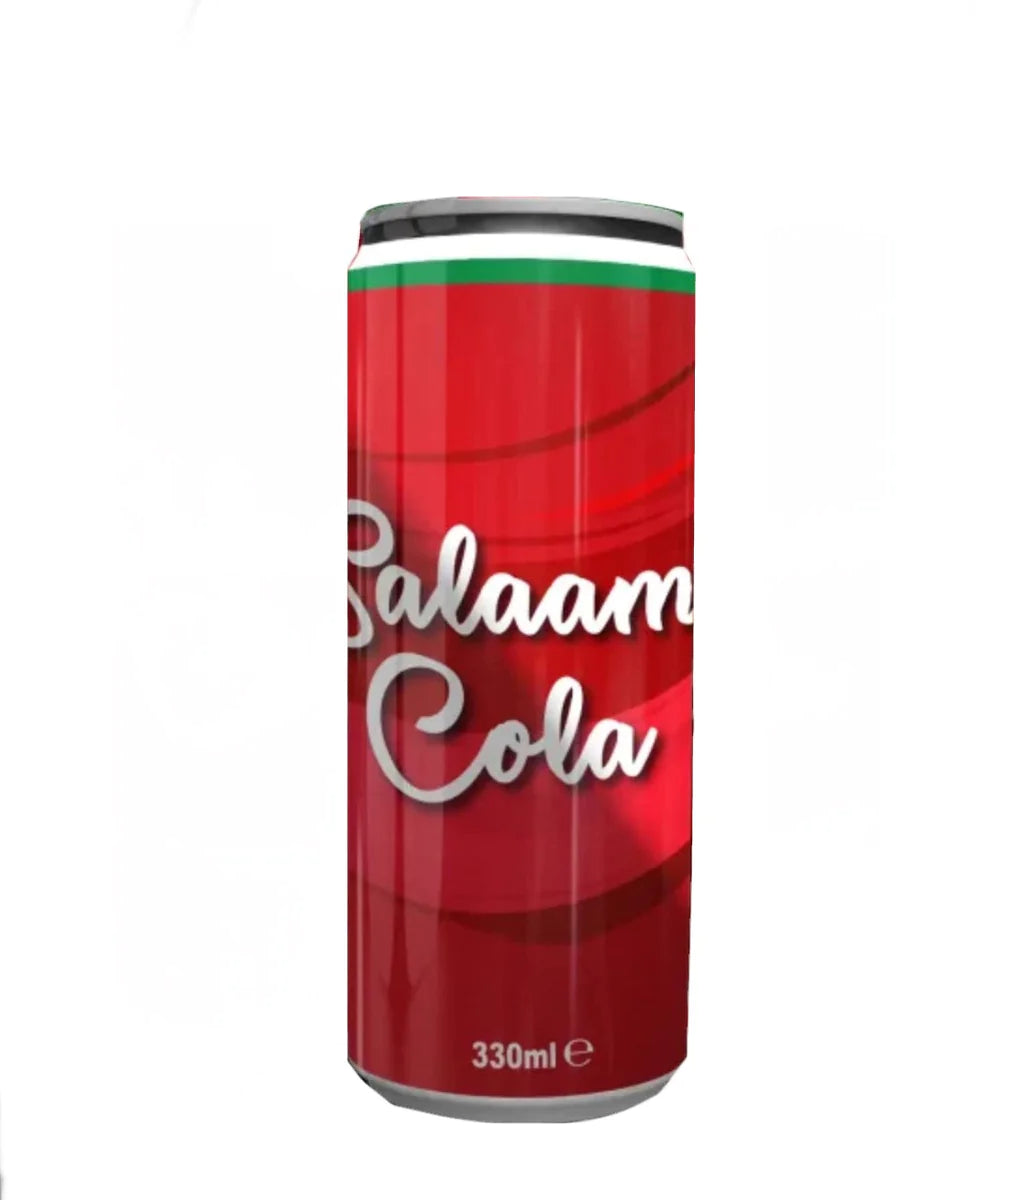 Salaam Cola Drink